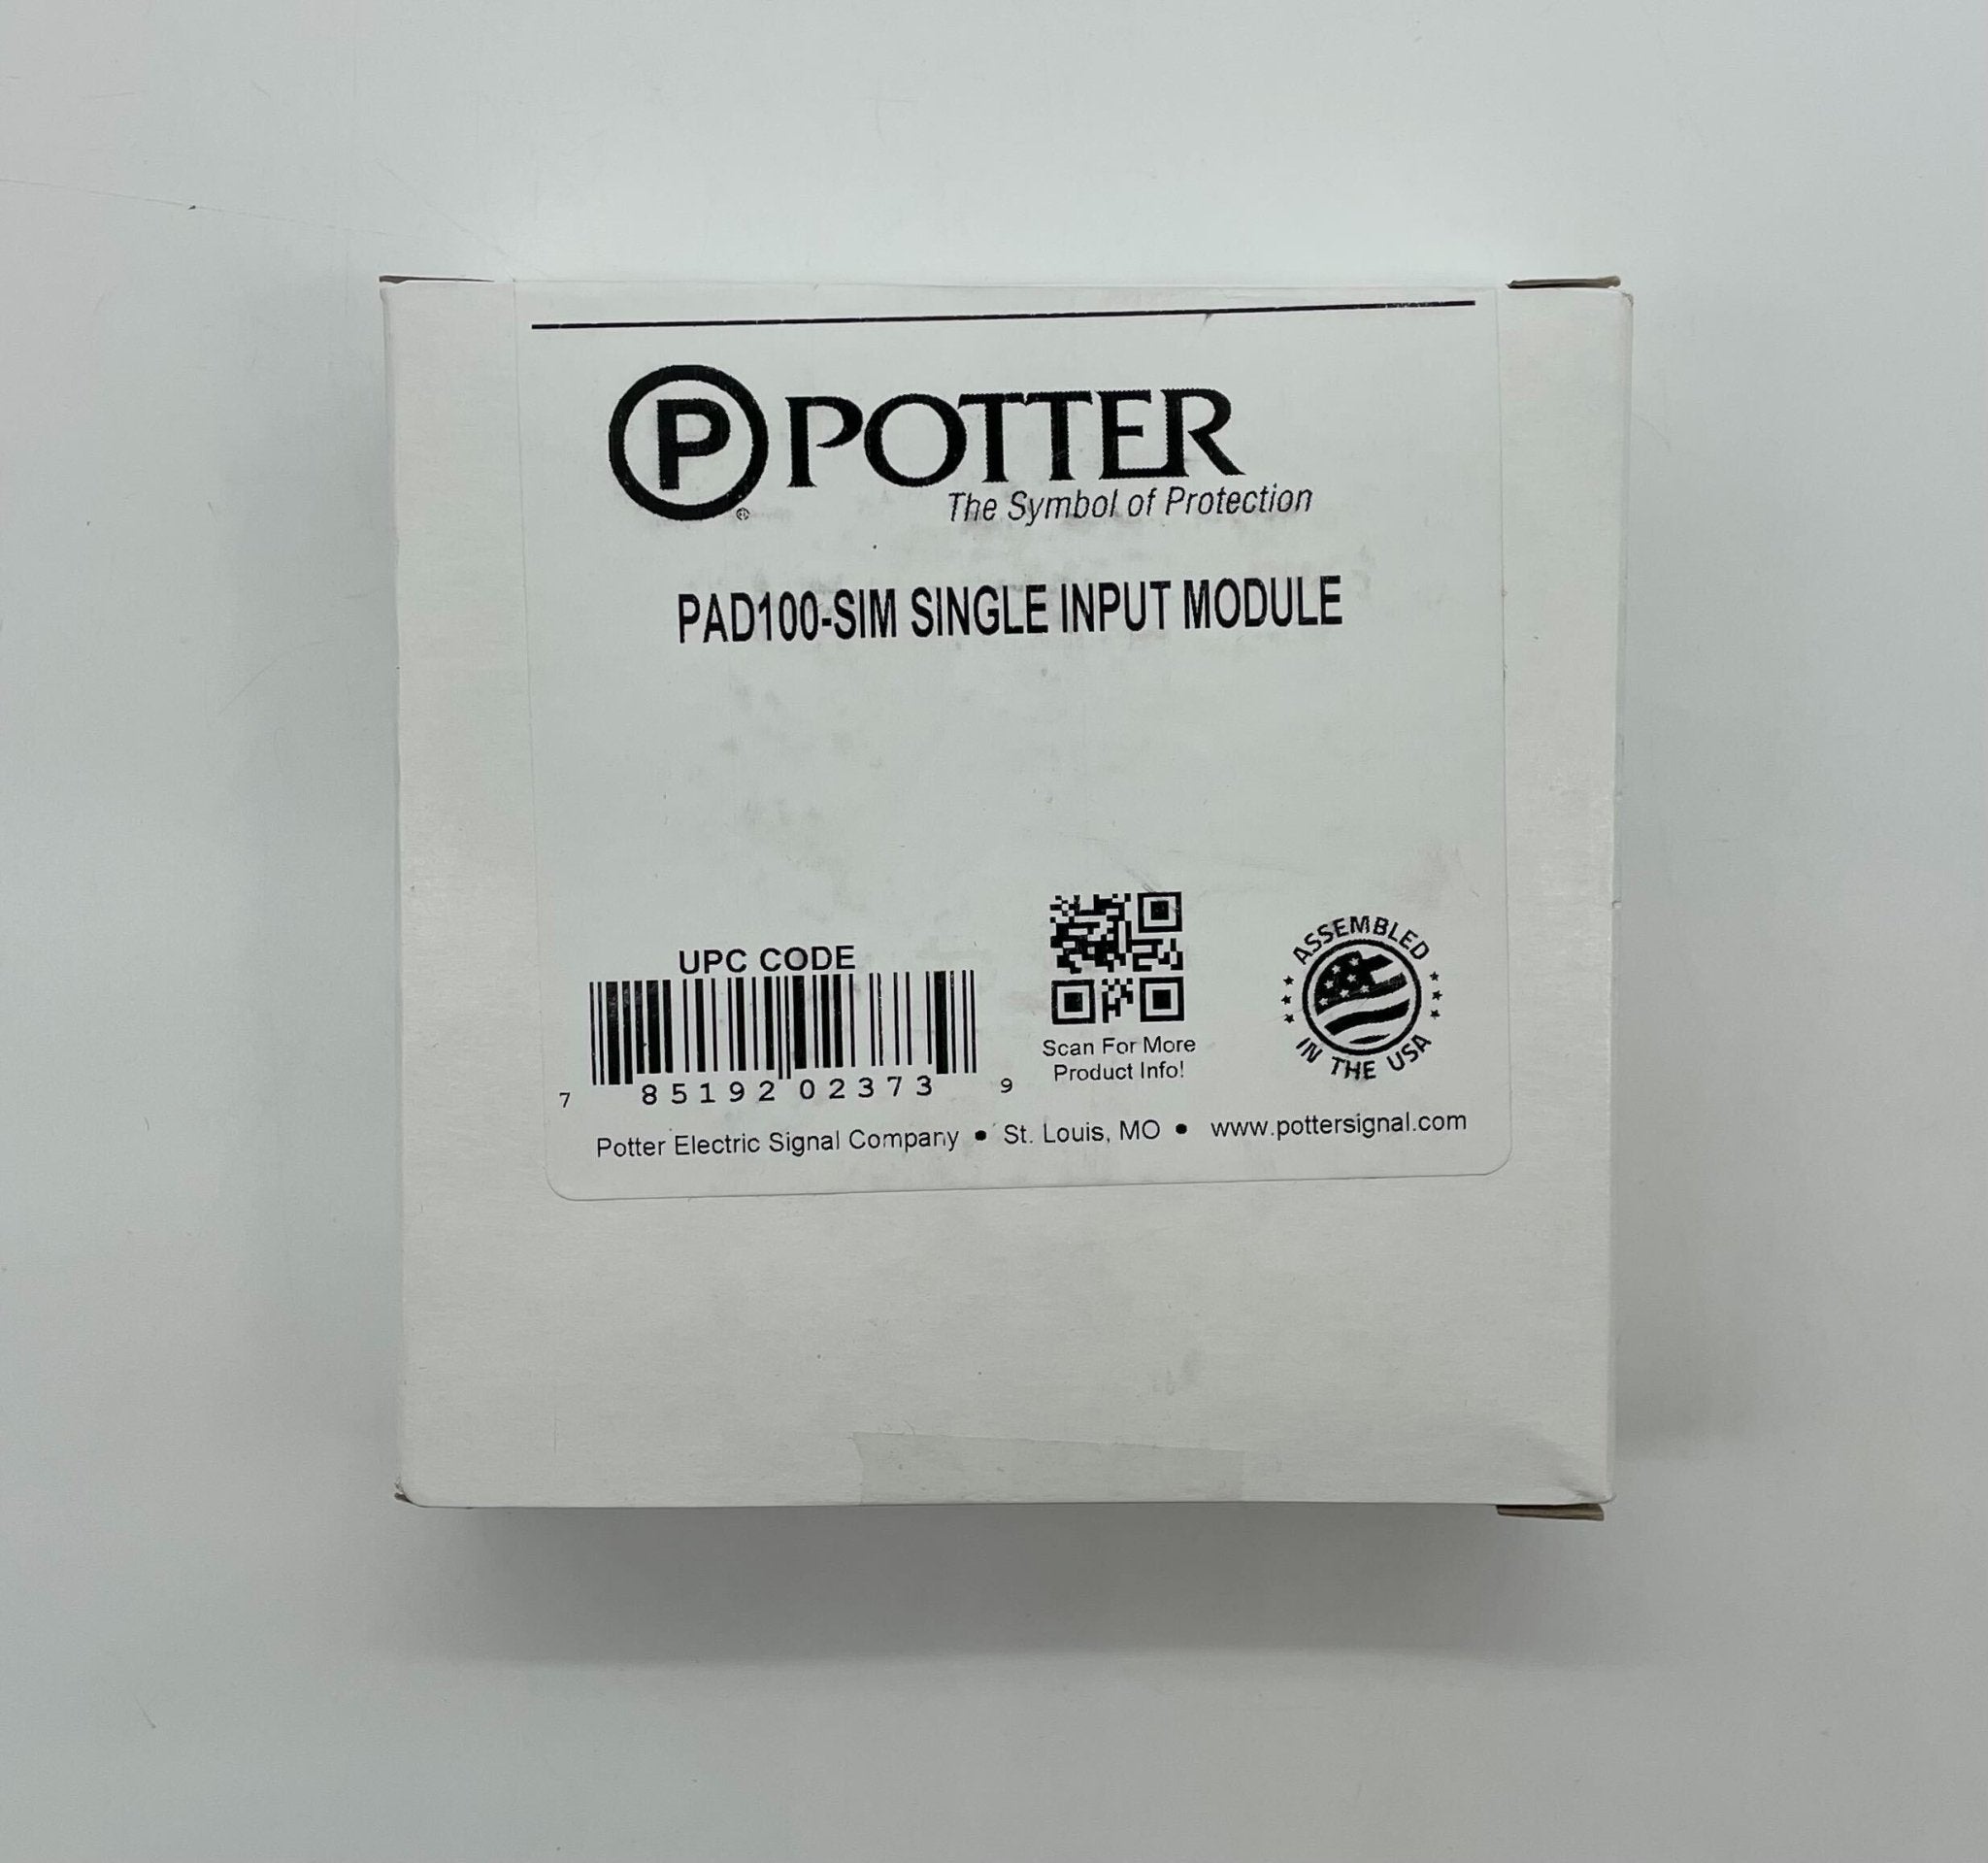 Potter PAD100-SIM - The Fire Alarm Supplier